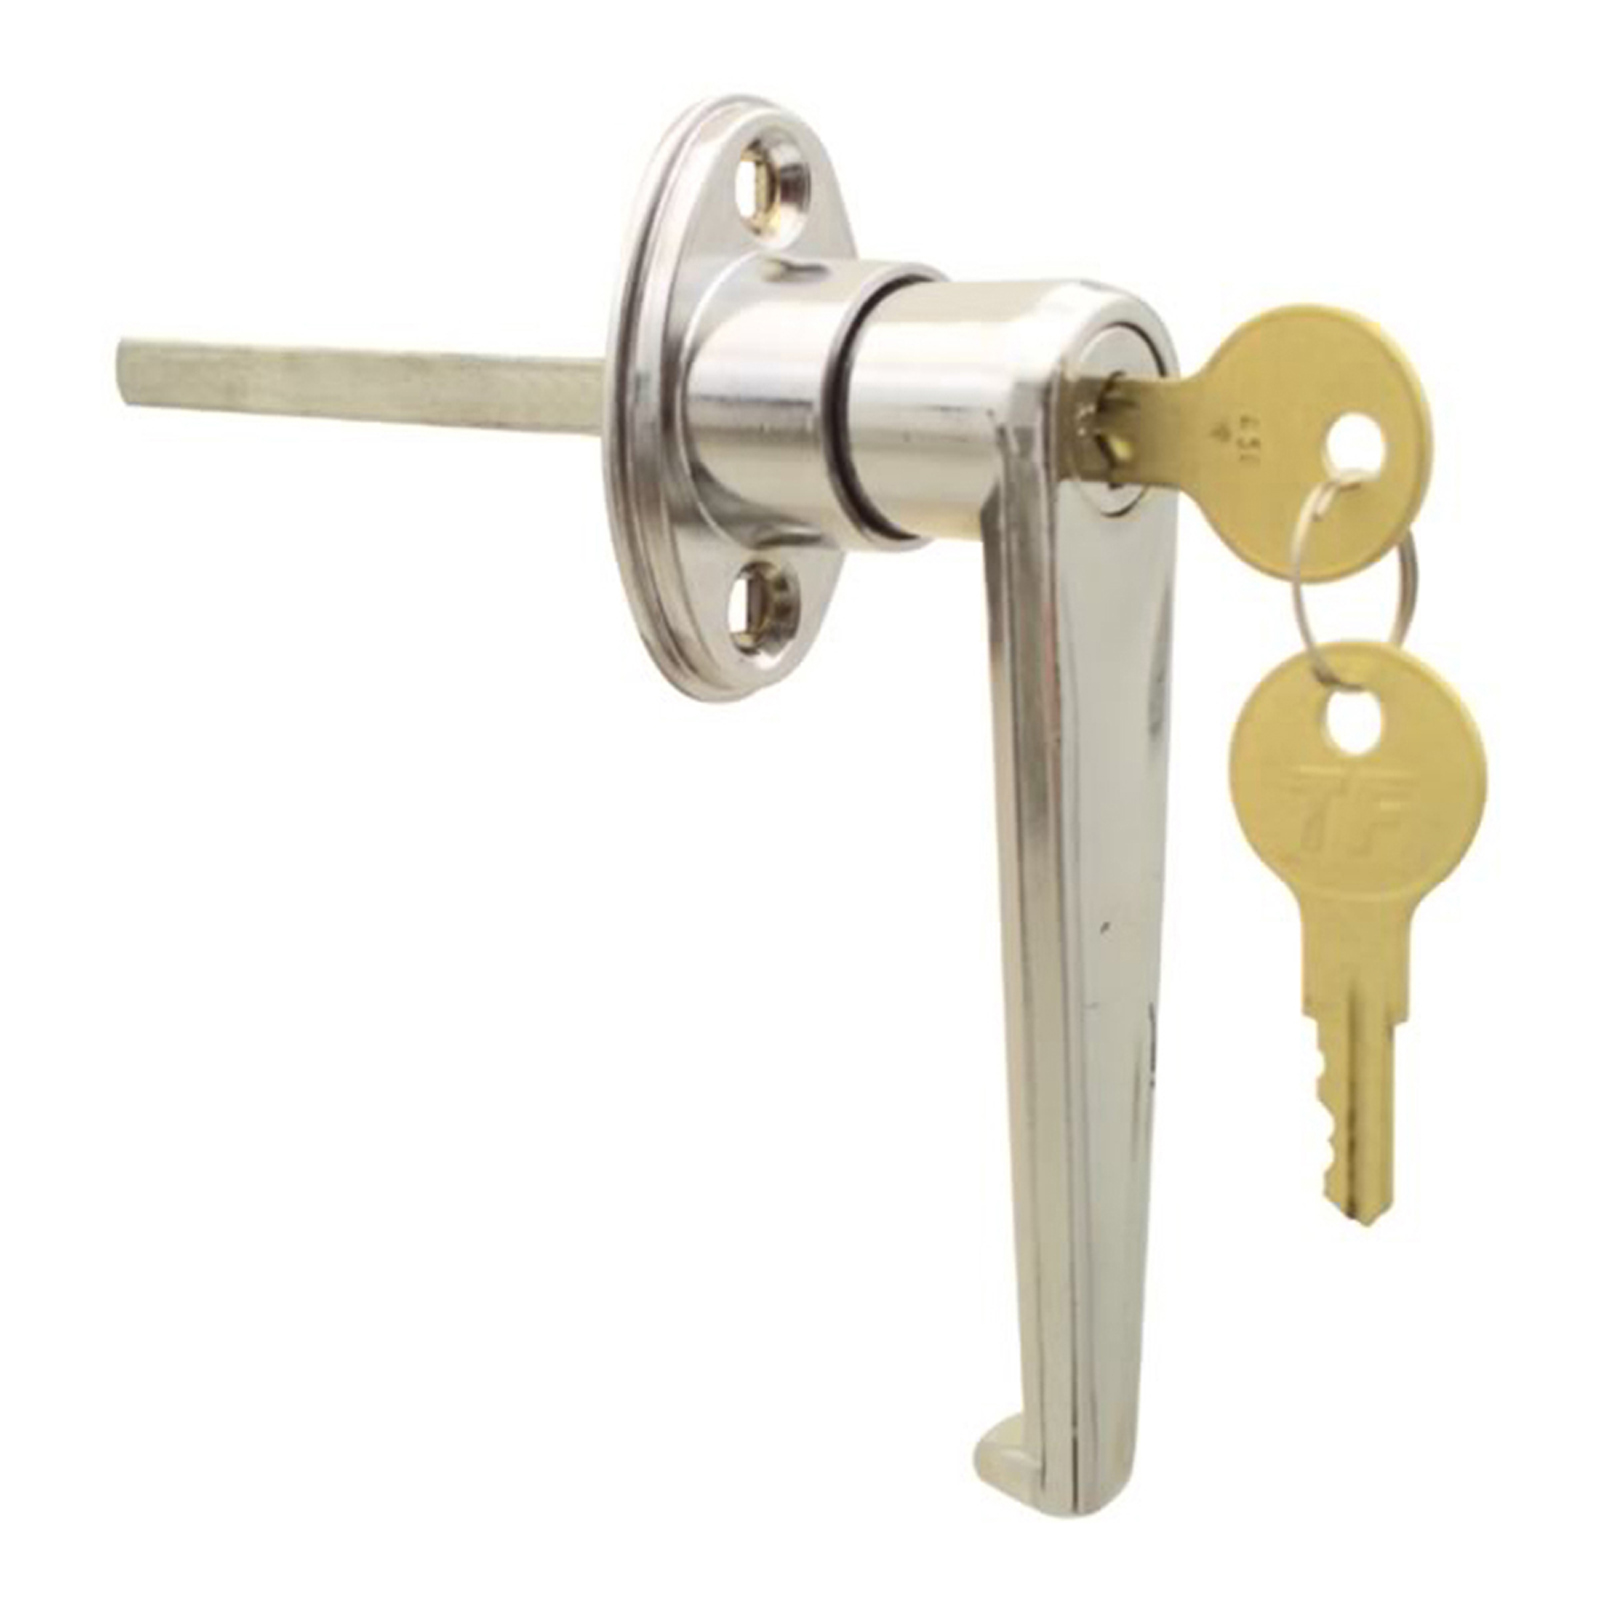 Ideal Security Inc. Keyed L Garage Door Replacement Lock